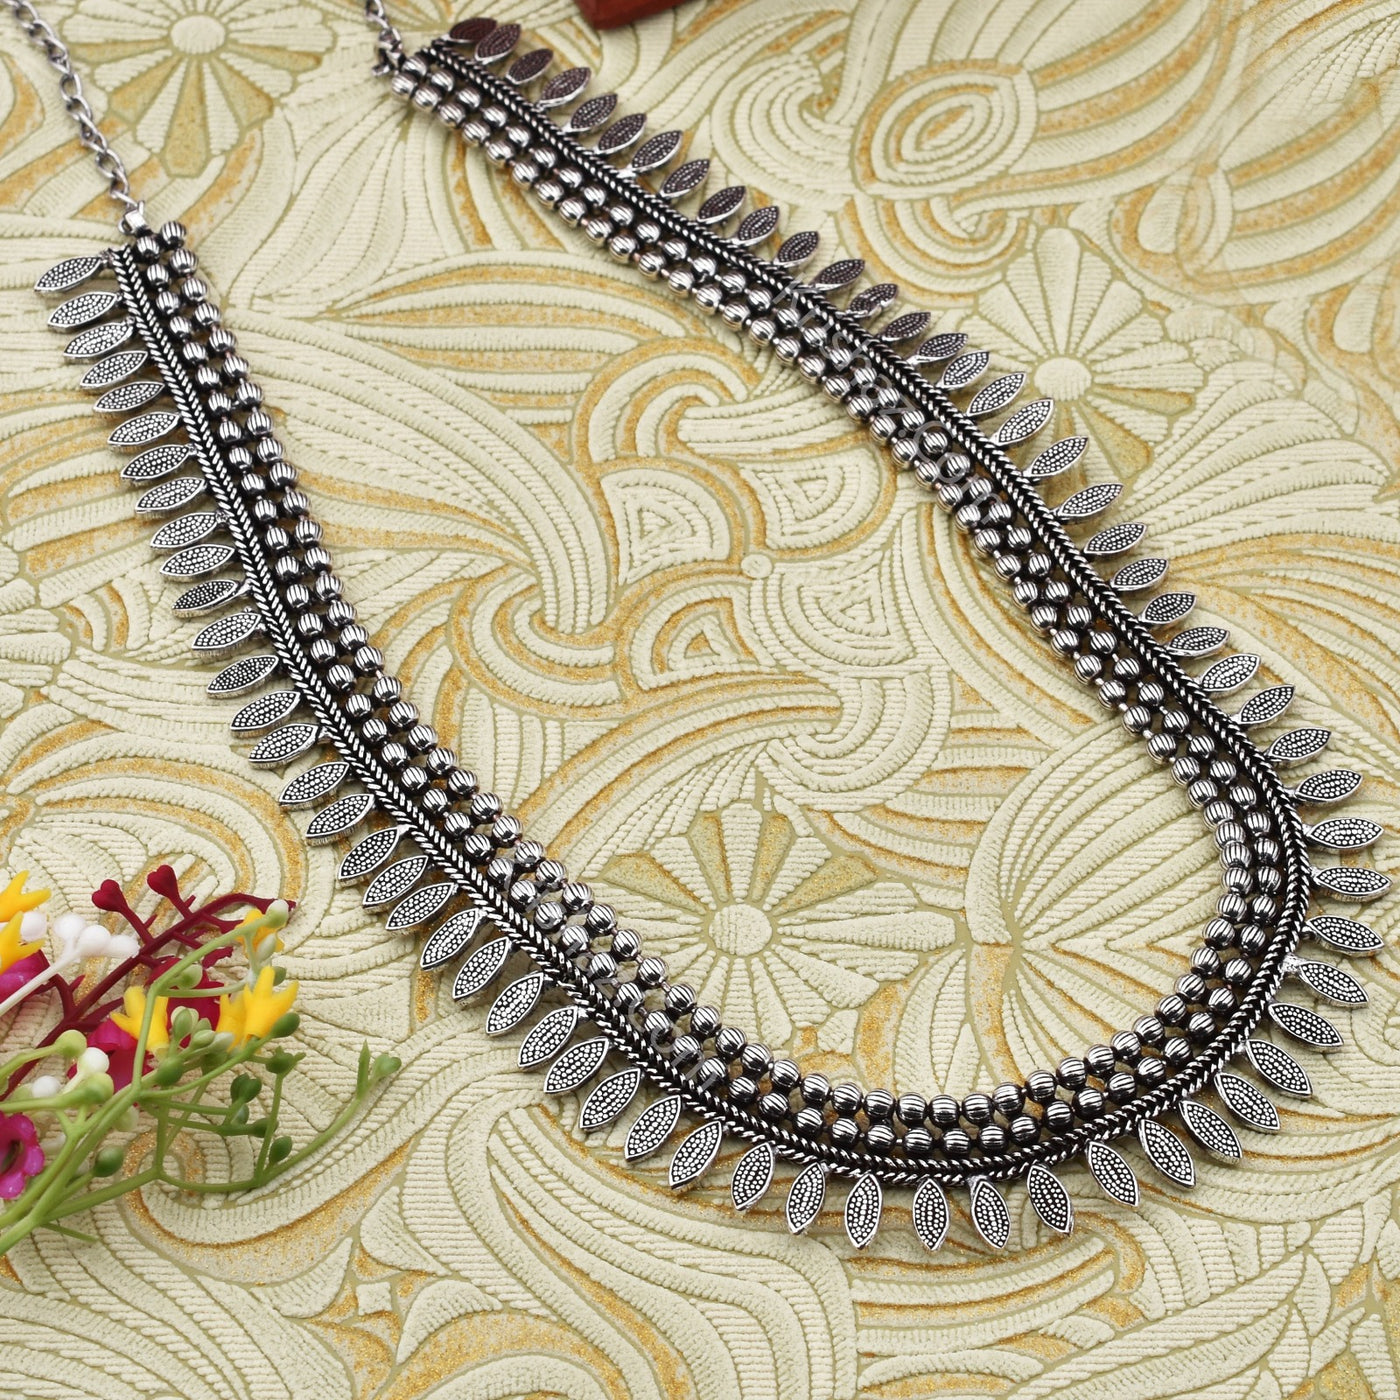 Oxidized German Silver Long Necklace